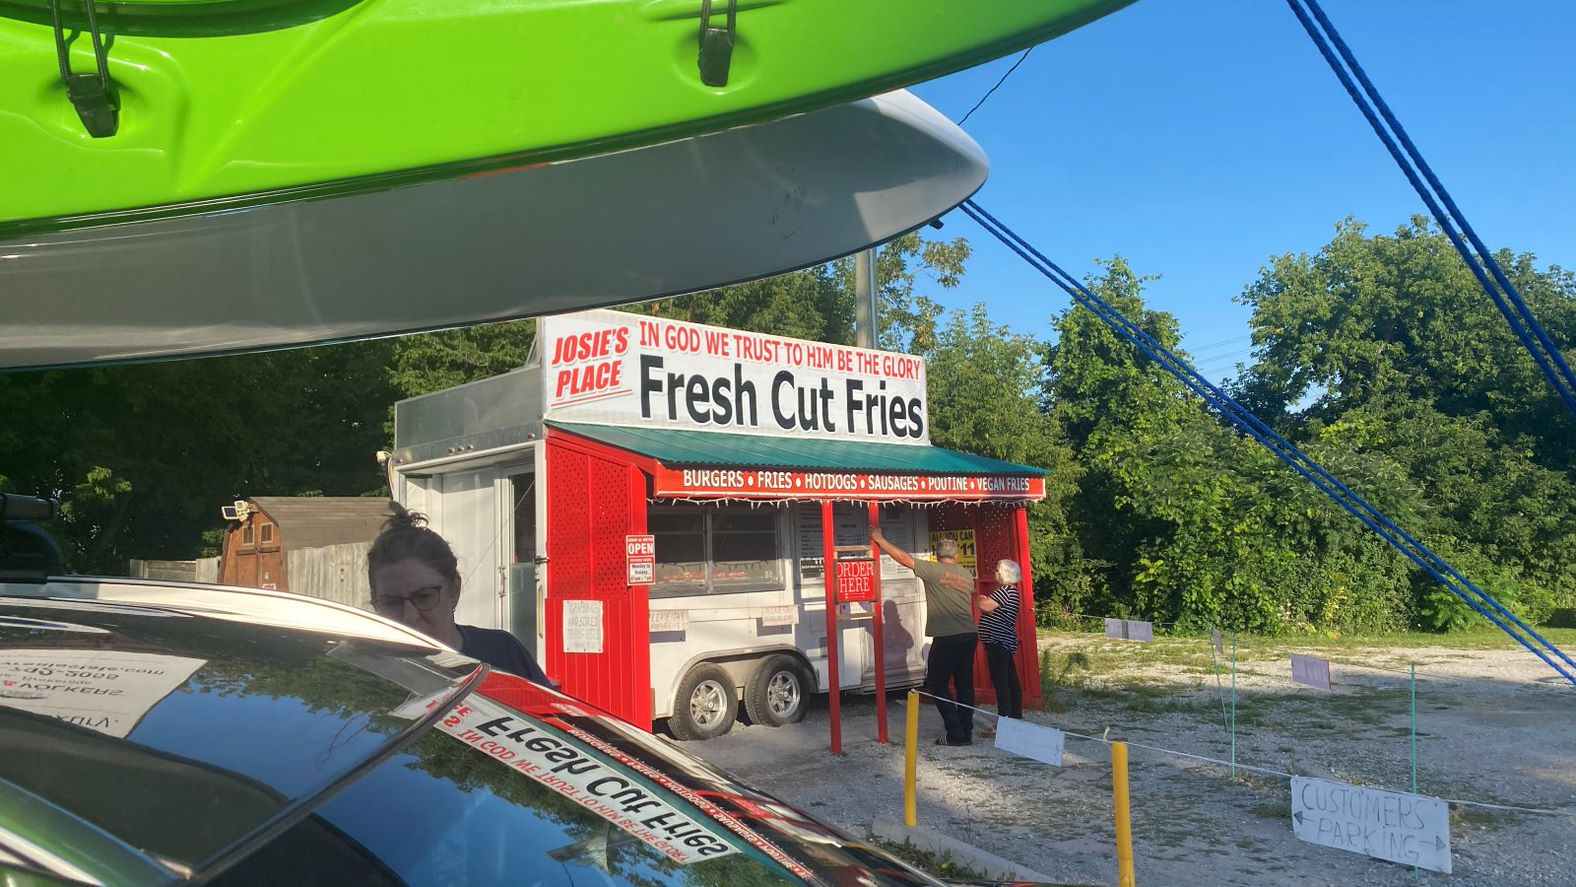 Jesus built my Fresh Cut Fries